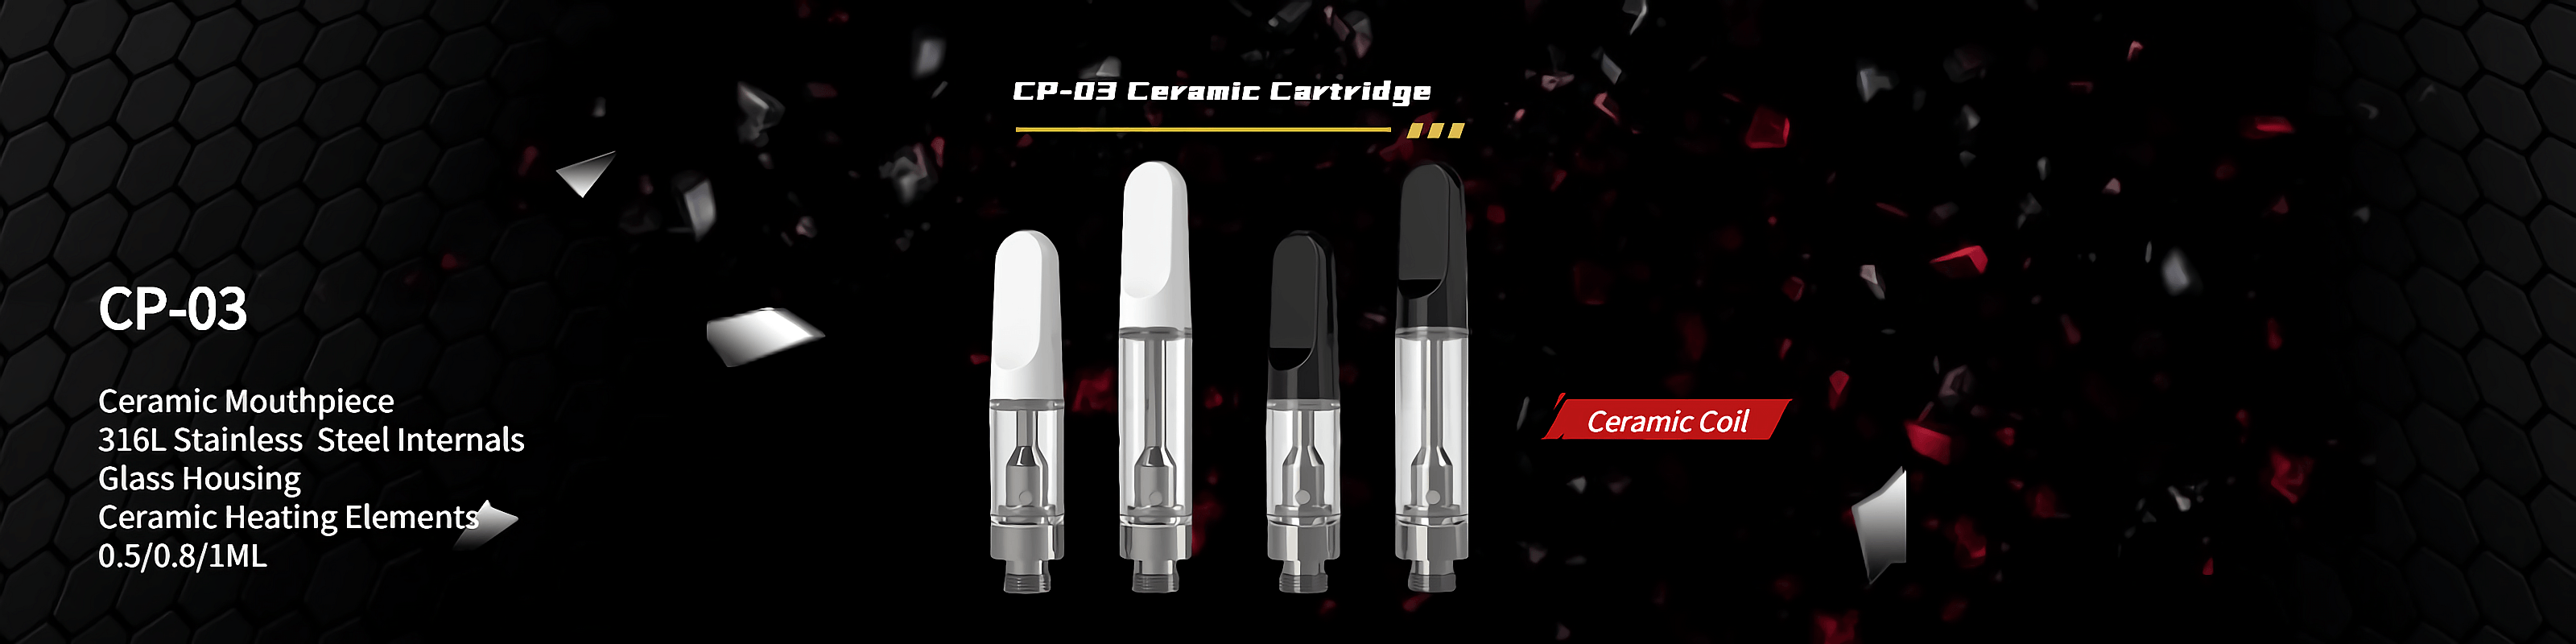 CP-03 Ceramic Cartridge